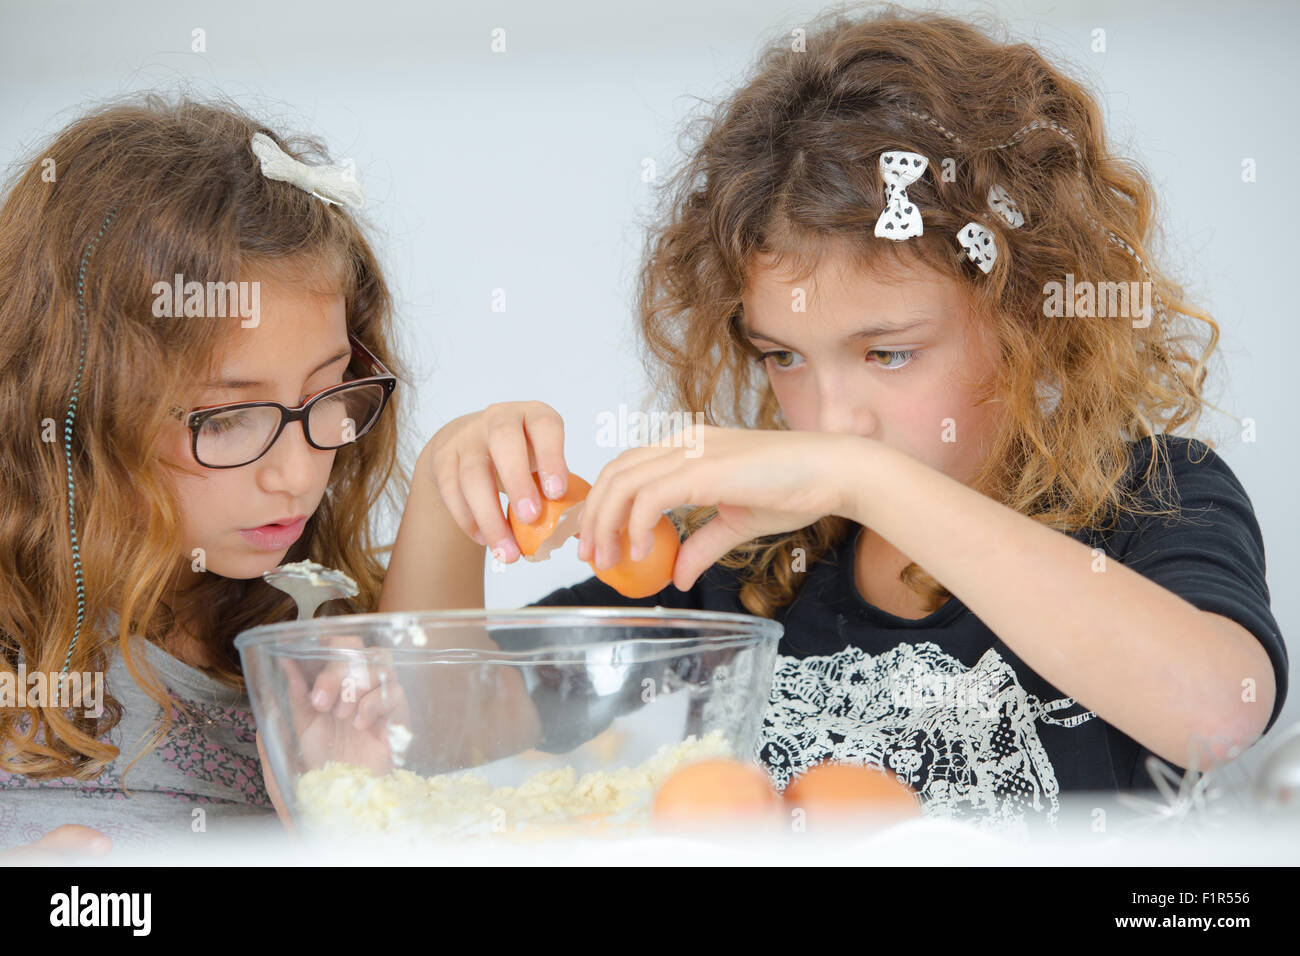 School girls breaking eggs into a bowl Stock Photo